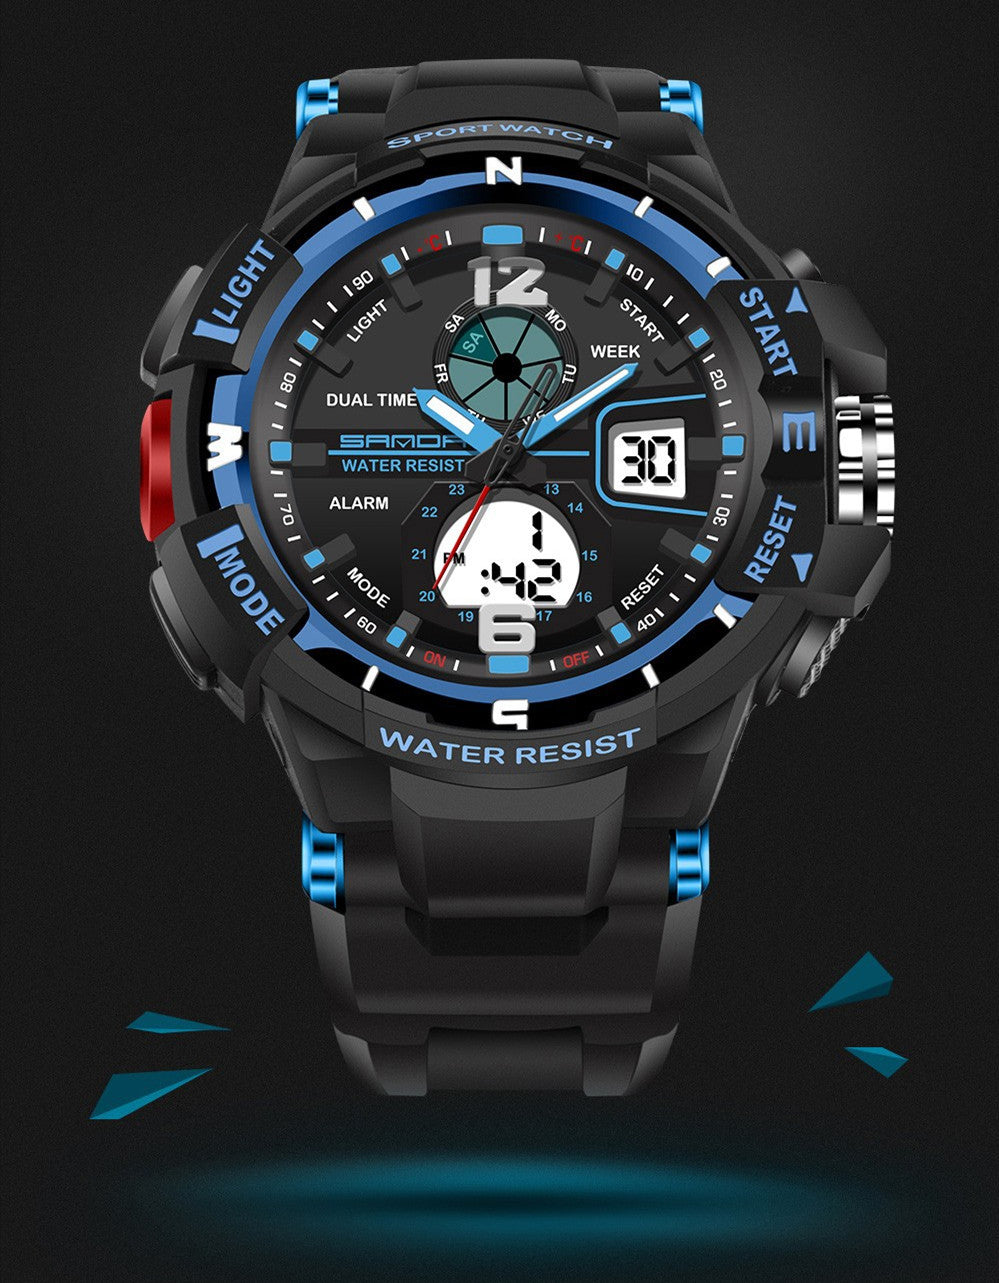 Functional waterproof electronic sports watch